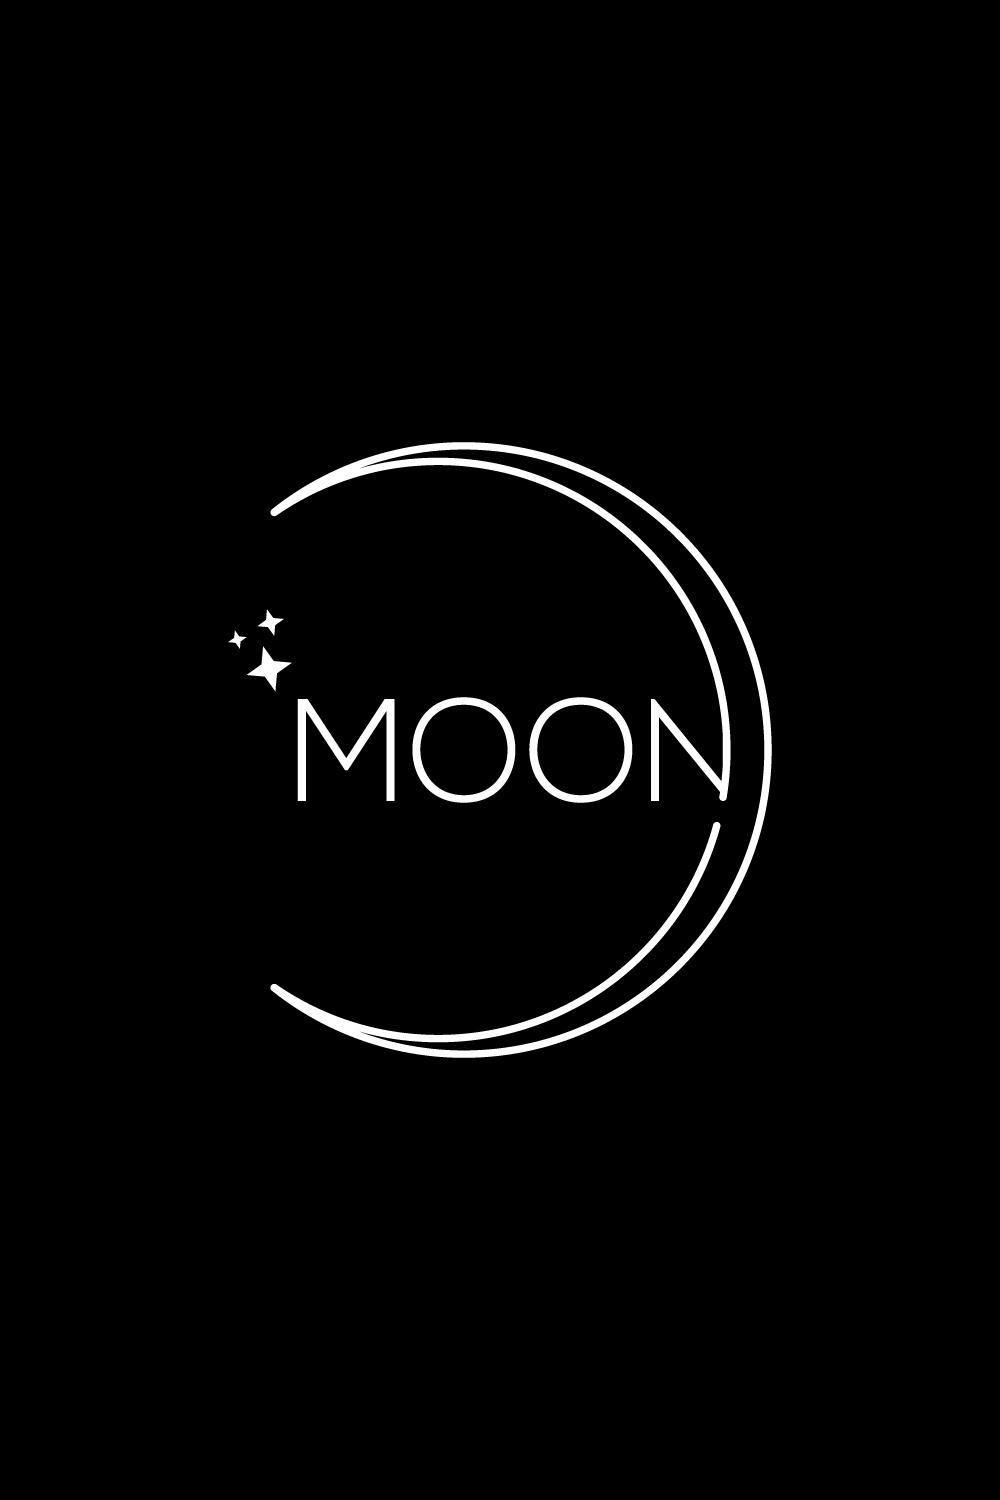 Moon Luxury logo pinterest preview image.